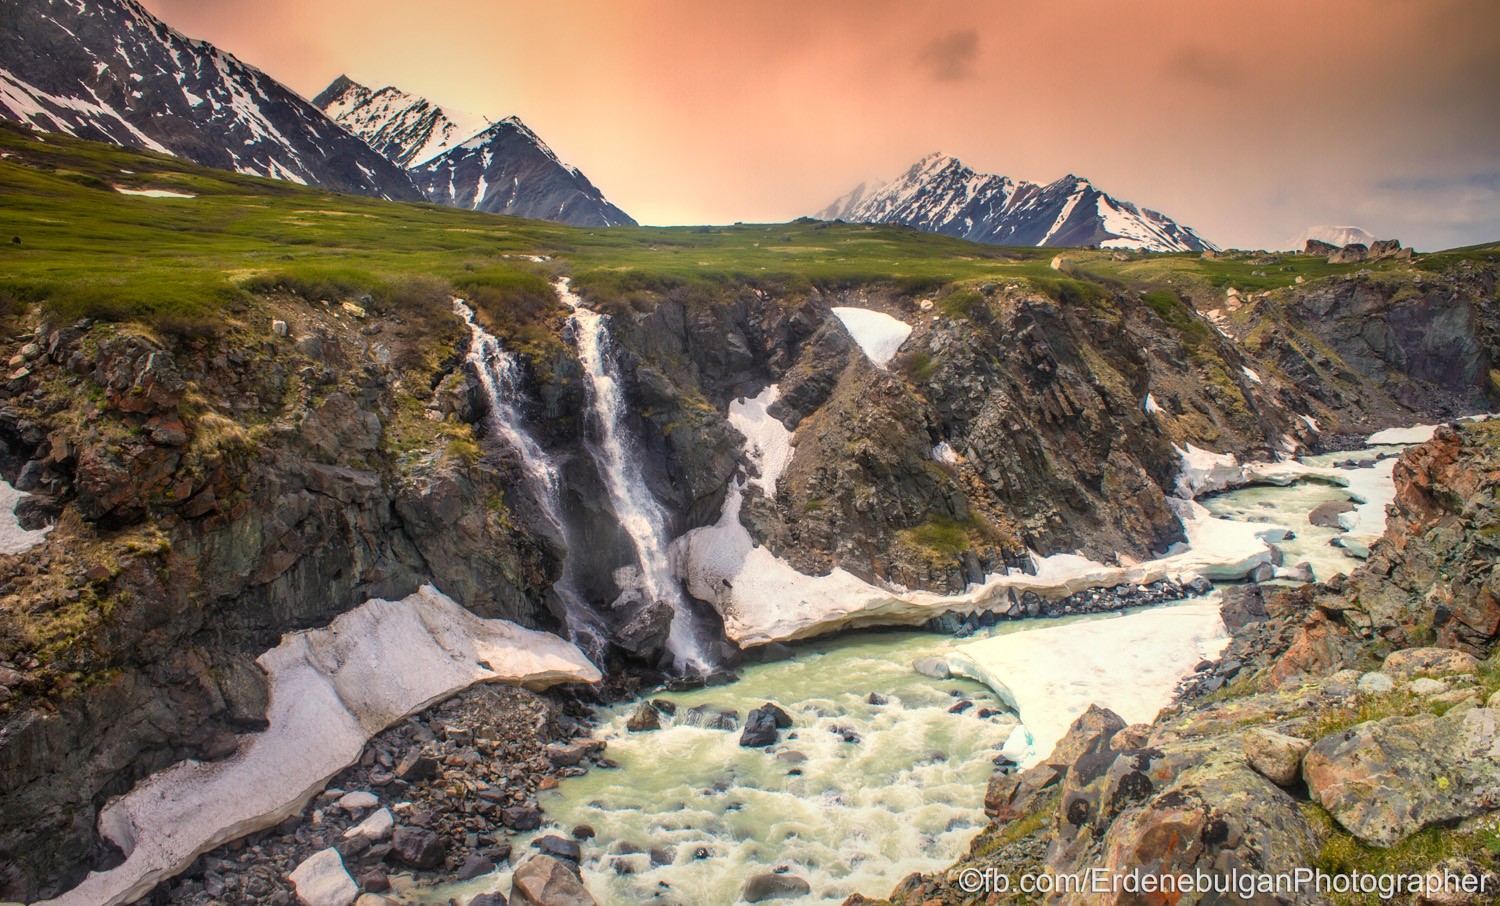 White River Canyon, Altai Tavan Bogd Mountains 